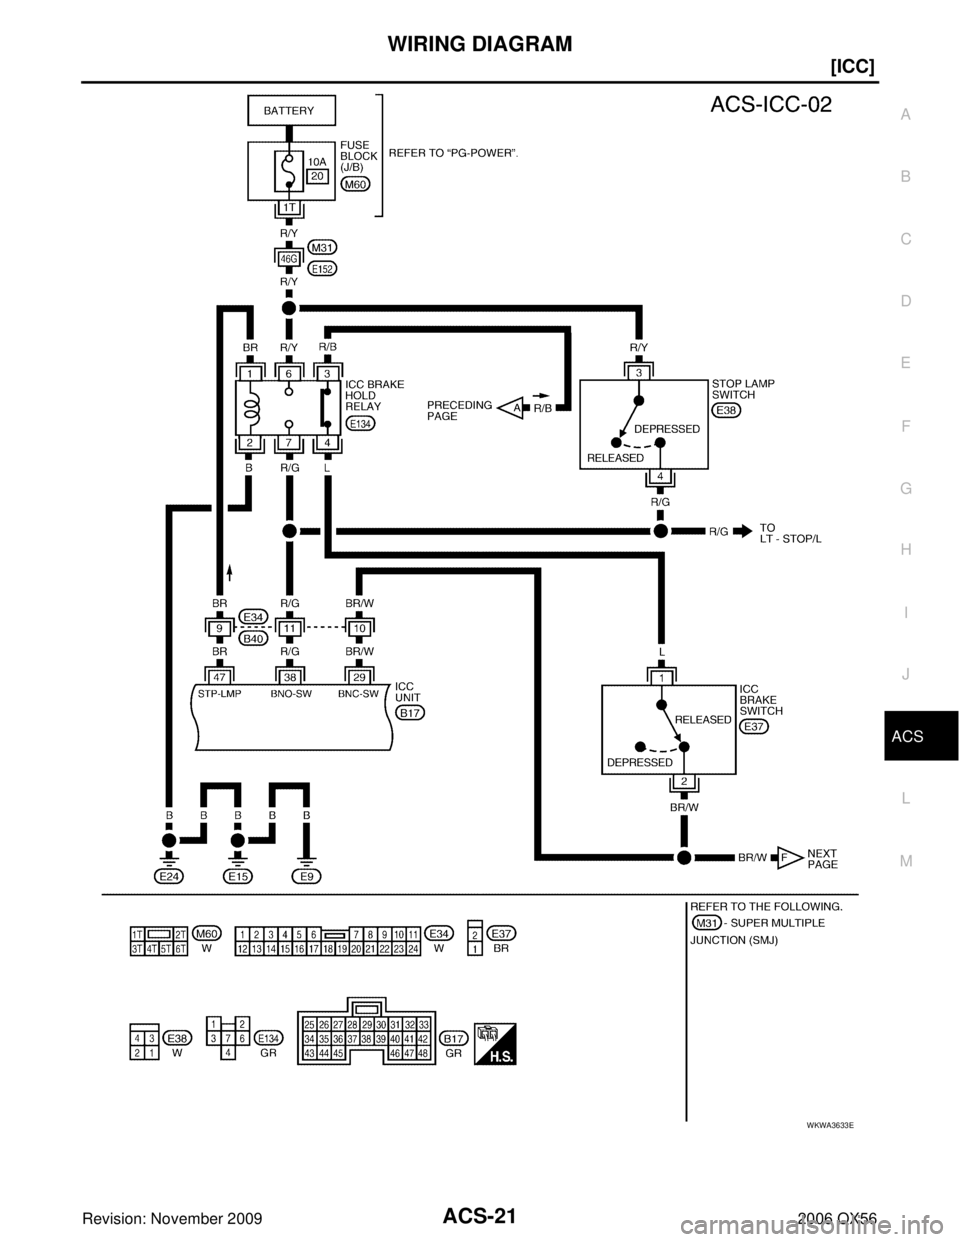 INFINITI QX56 2006  Factory Service Manual WIRING DIAGRAMACS-21
[ICC]
C
DE
F
G H
I
J
L
M A
B
ACS
Revision: November 2009 2006 QX56
WKWA3633E 